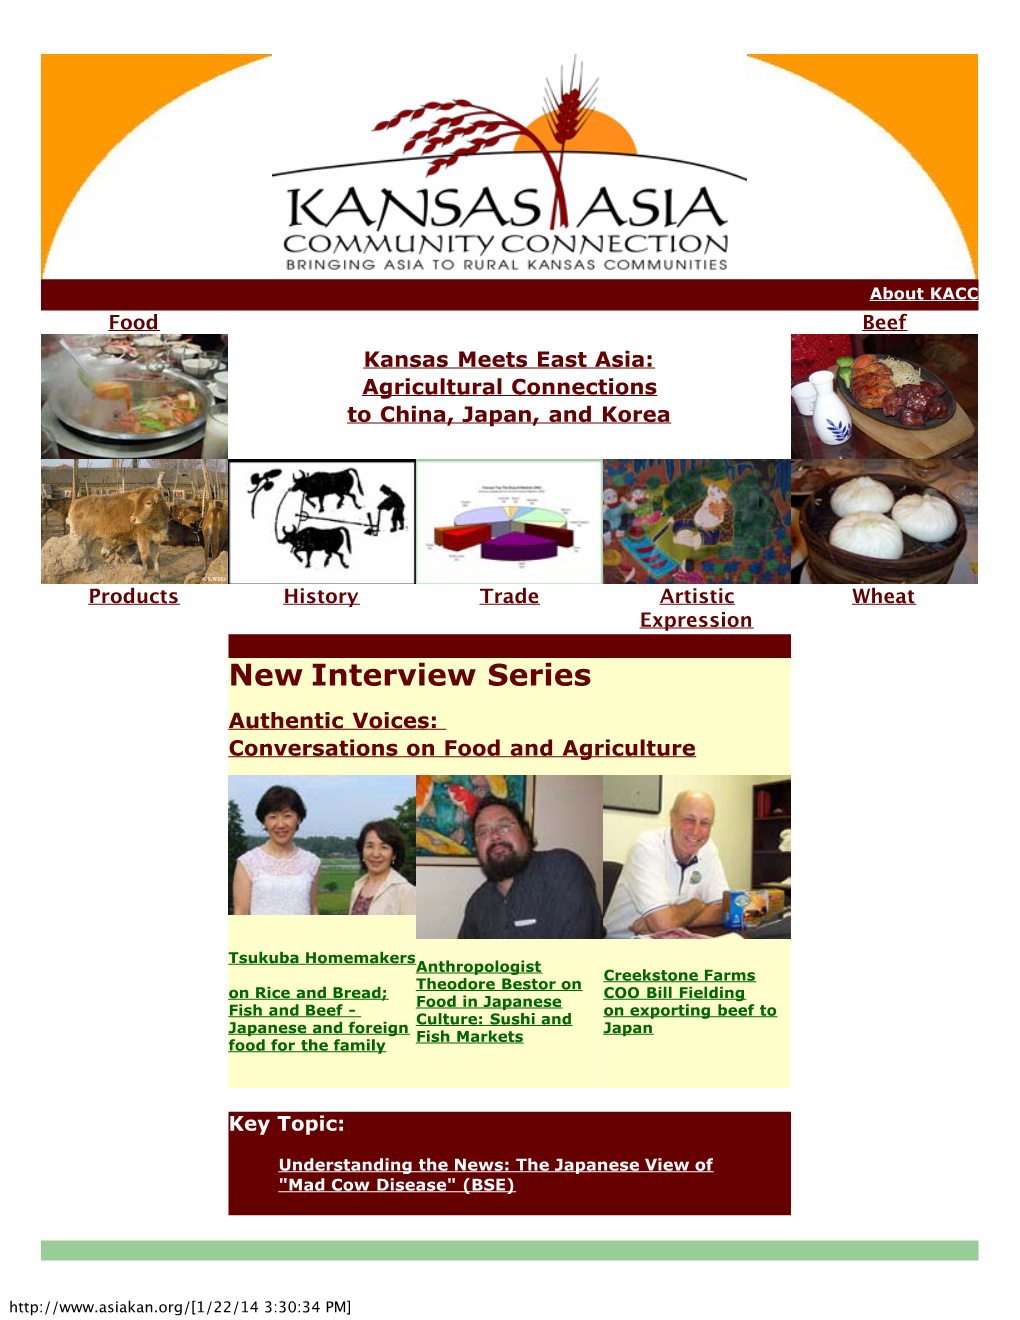 KACC: Kansas/Asian Community Connection